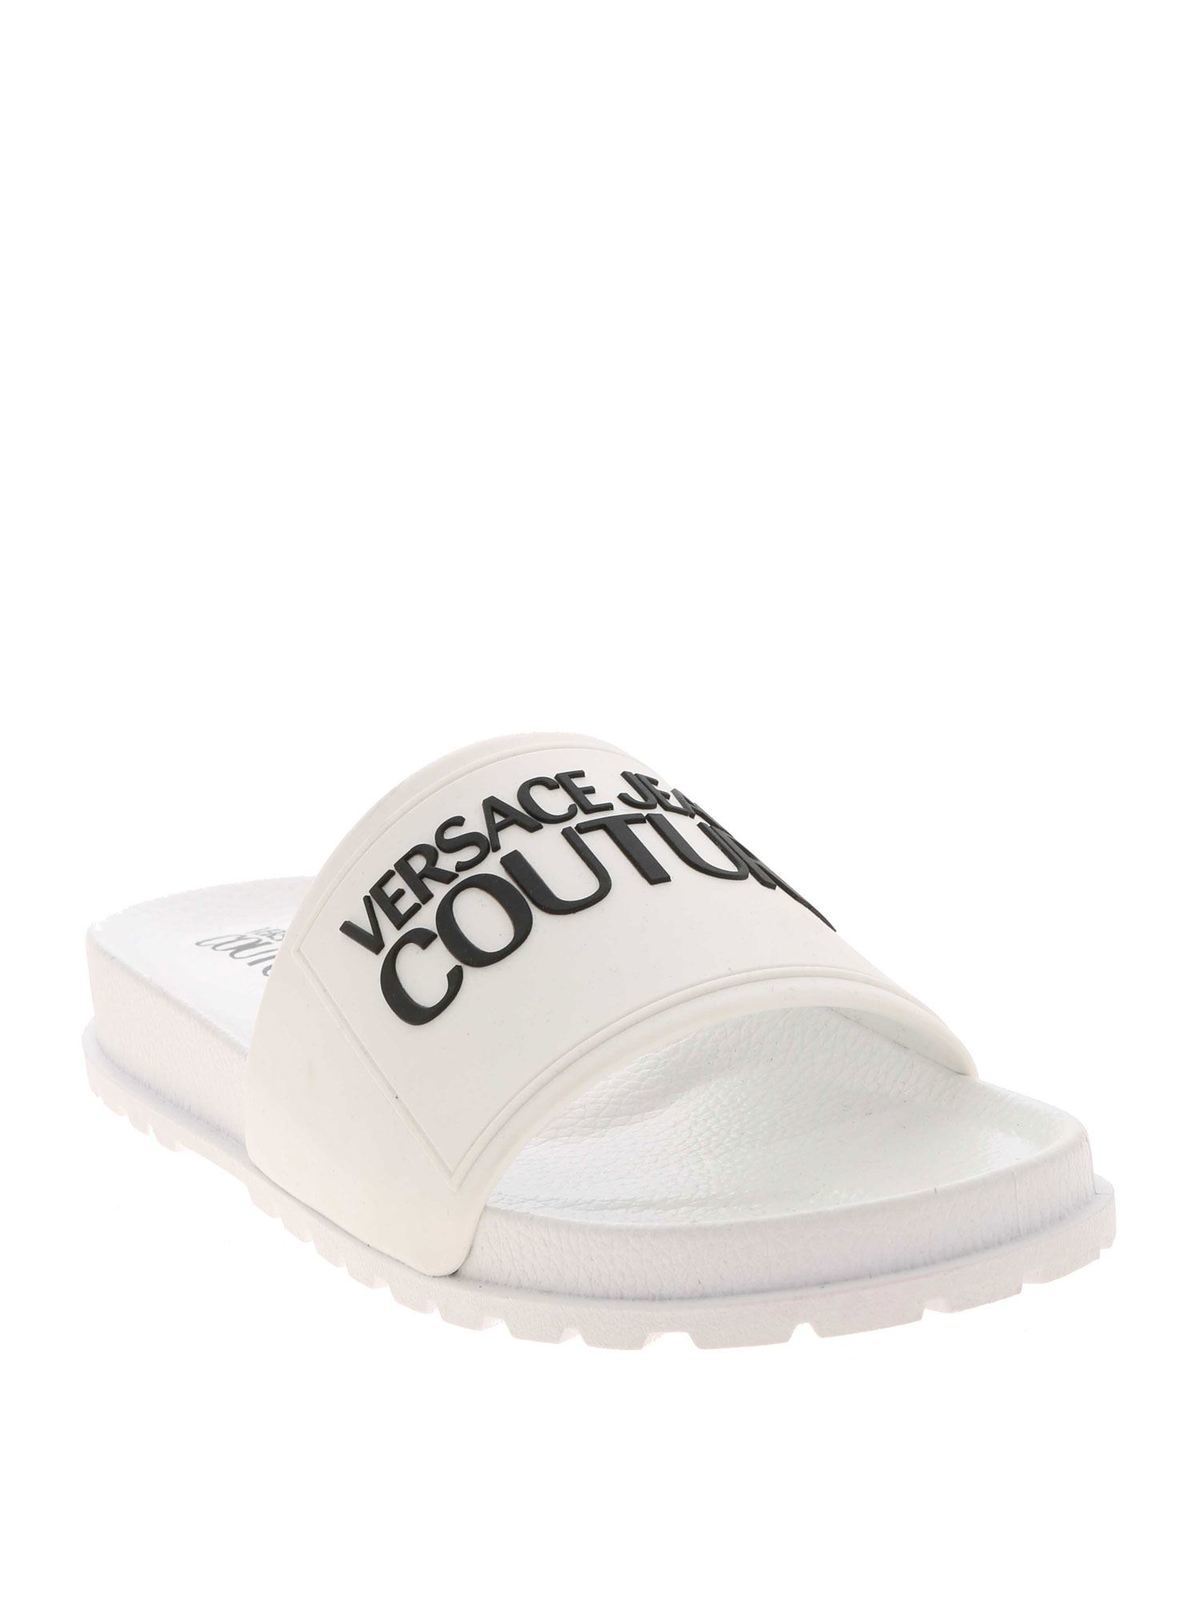 white versace slippers